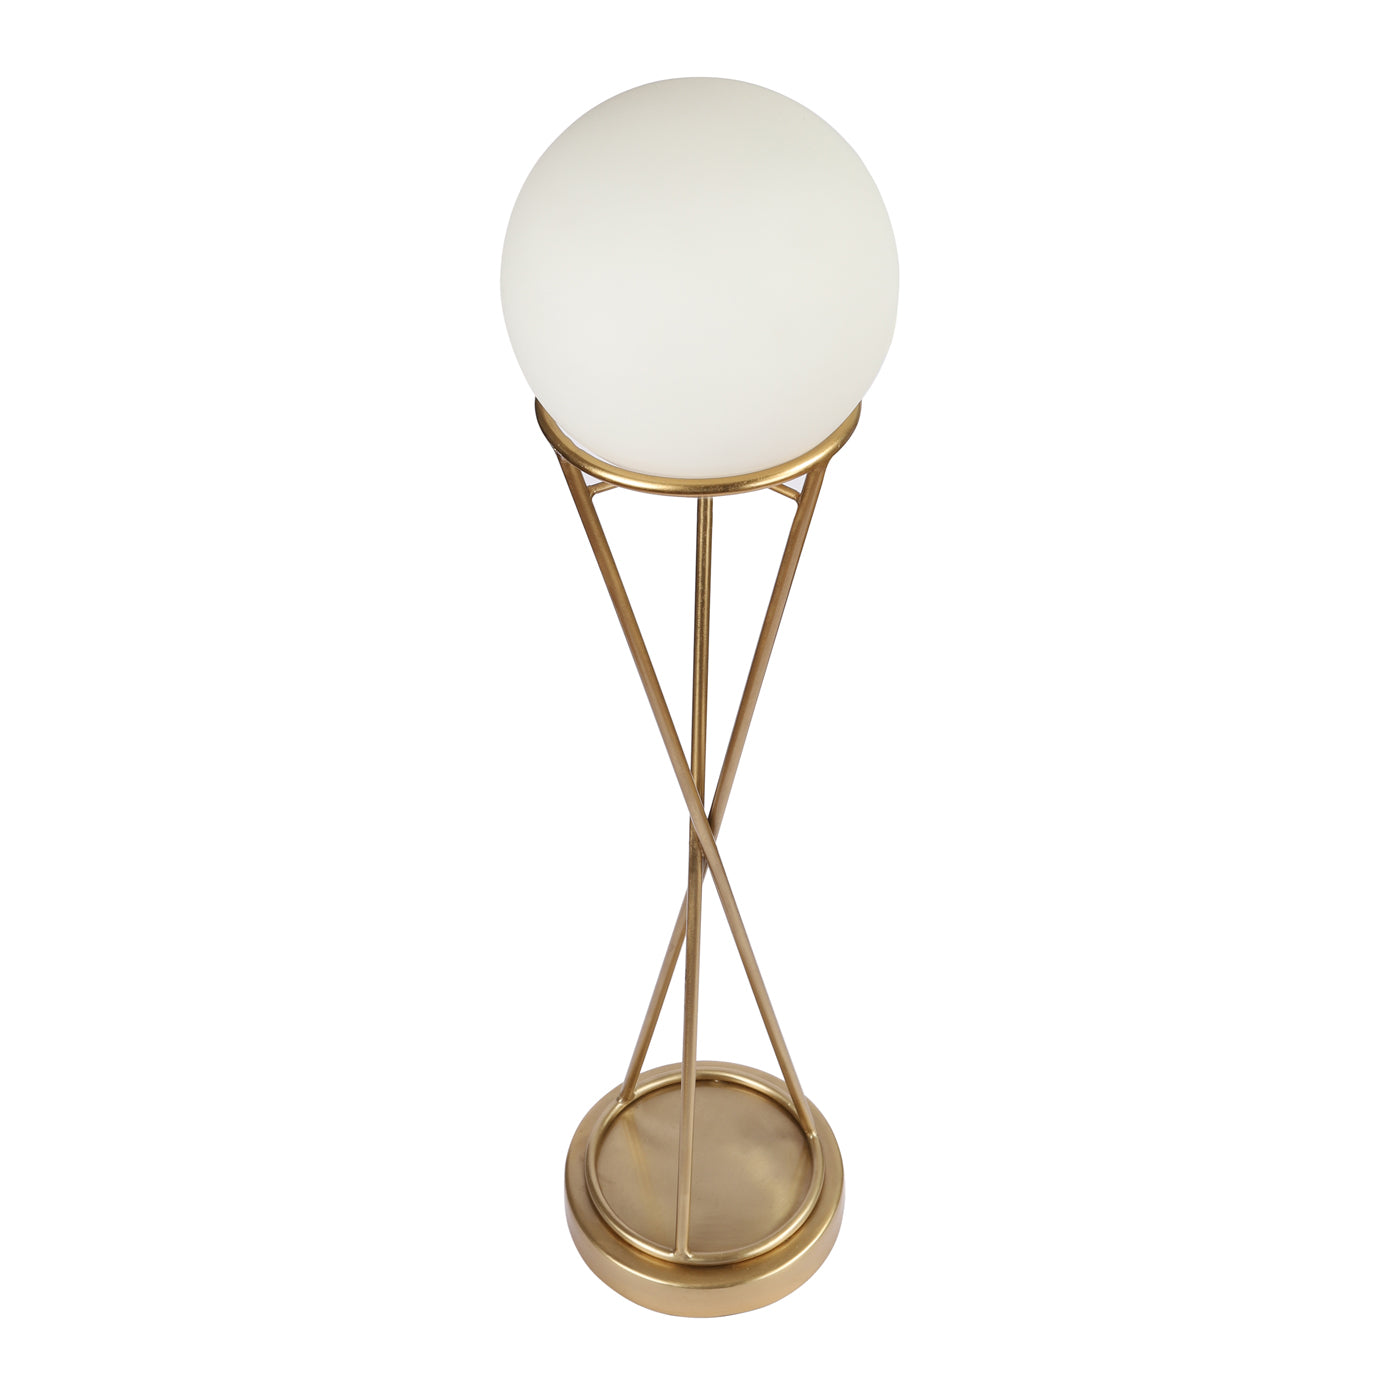 "Sybil's Orb" Gold by gold Matt Brass finish table lamp